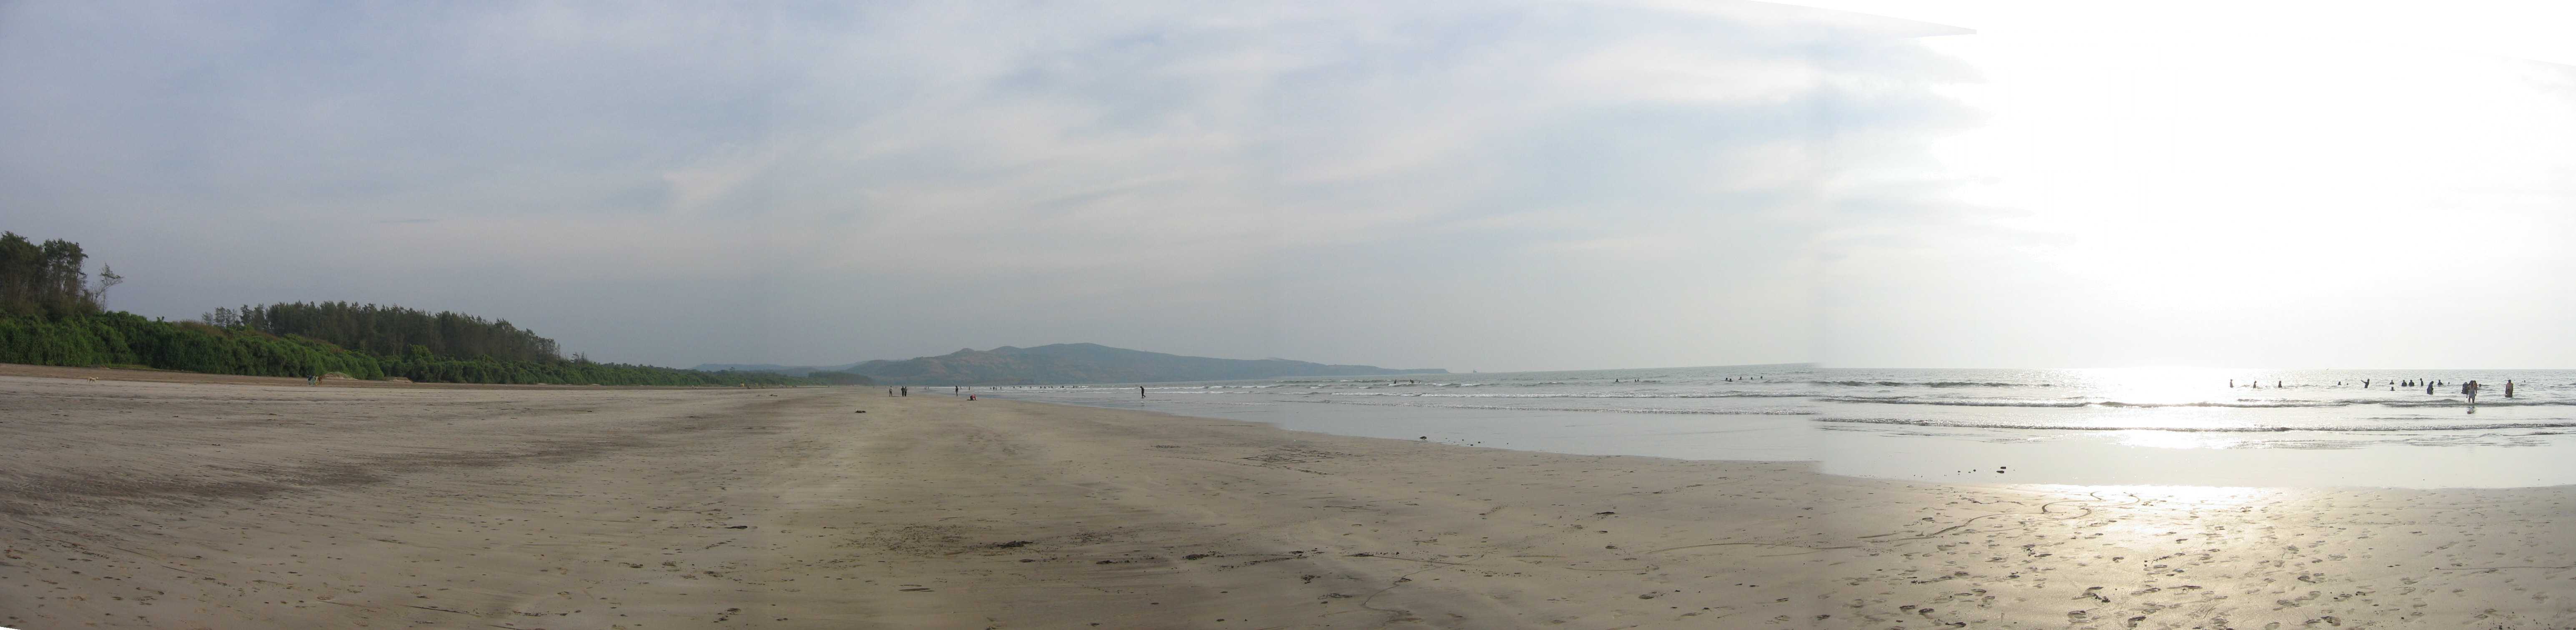 Panoramic view of Dive Aagar beach